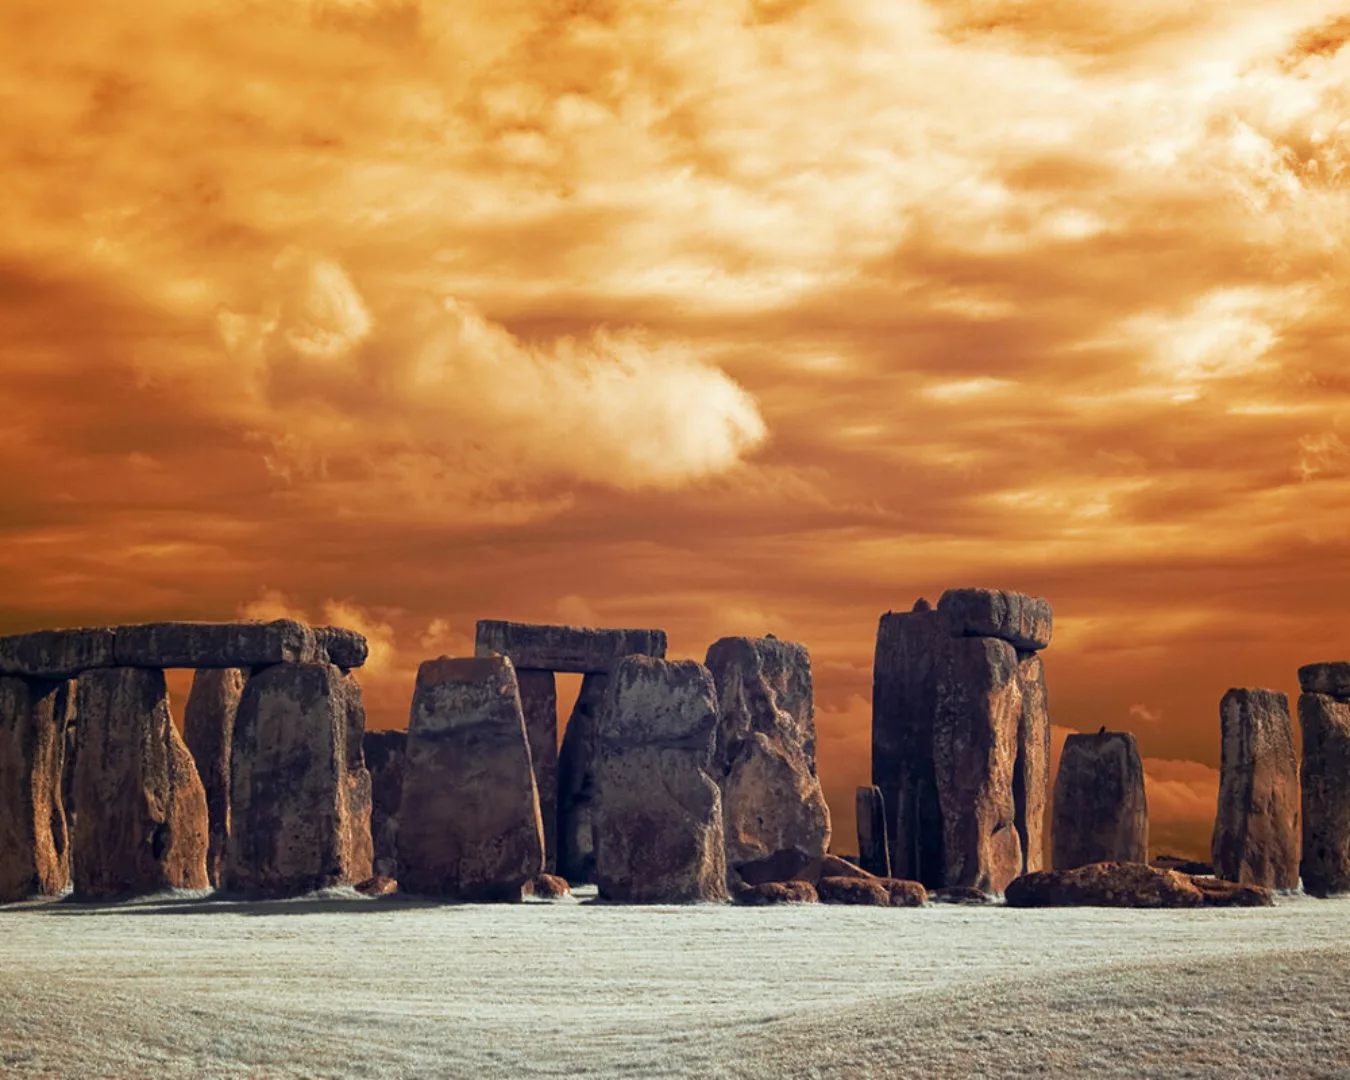 Fototapete "Stonehenge" 4,00x2,50 m / Strukturvlies Klassik günstig online kaufen